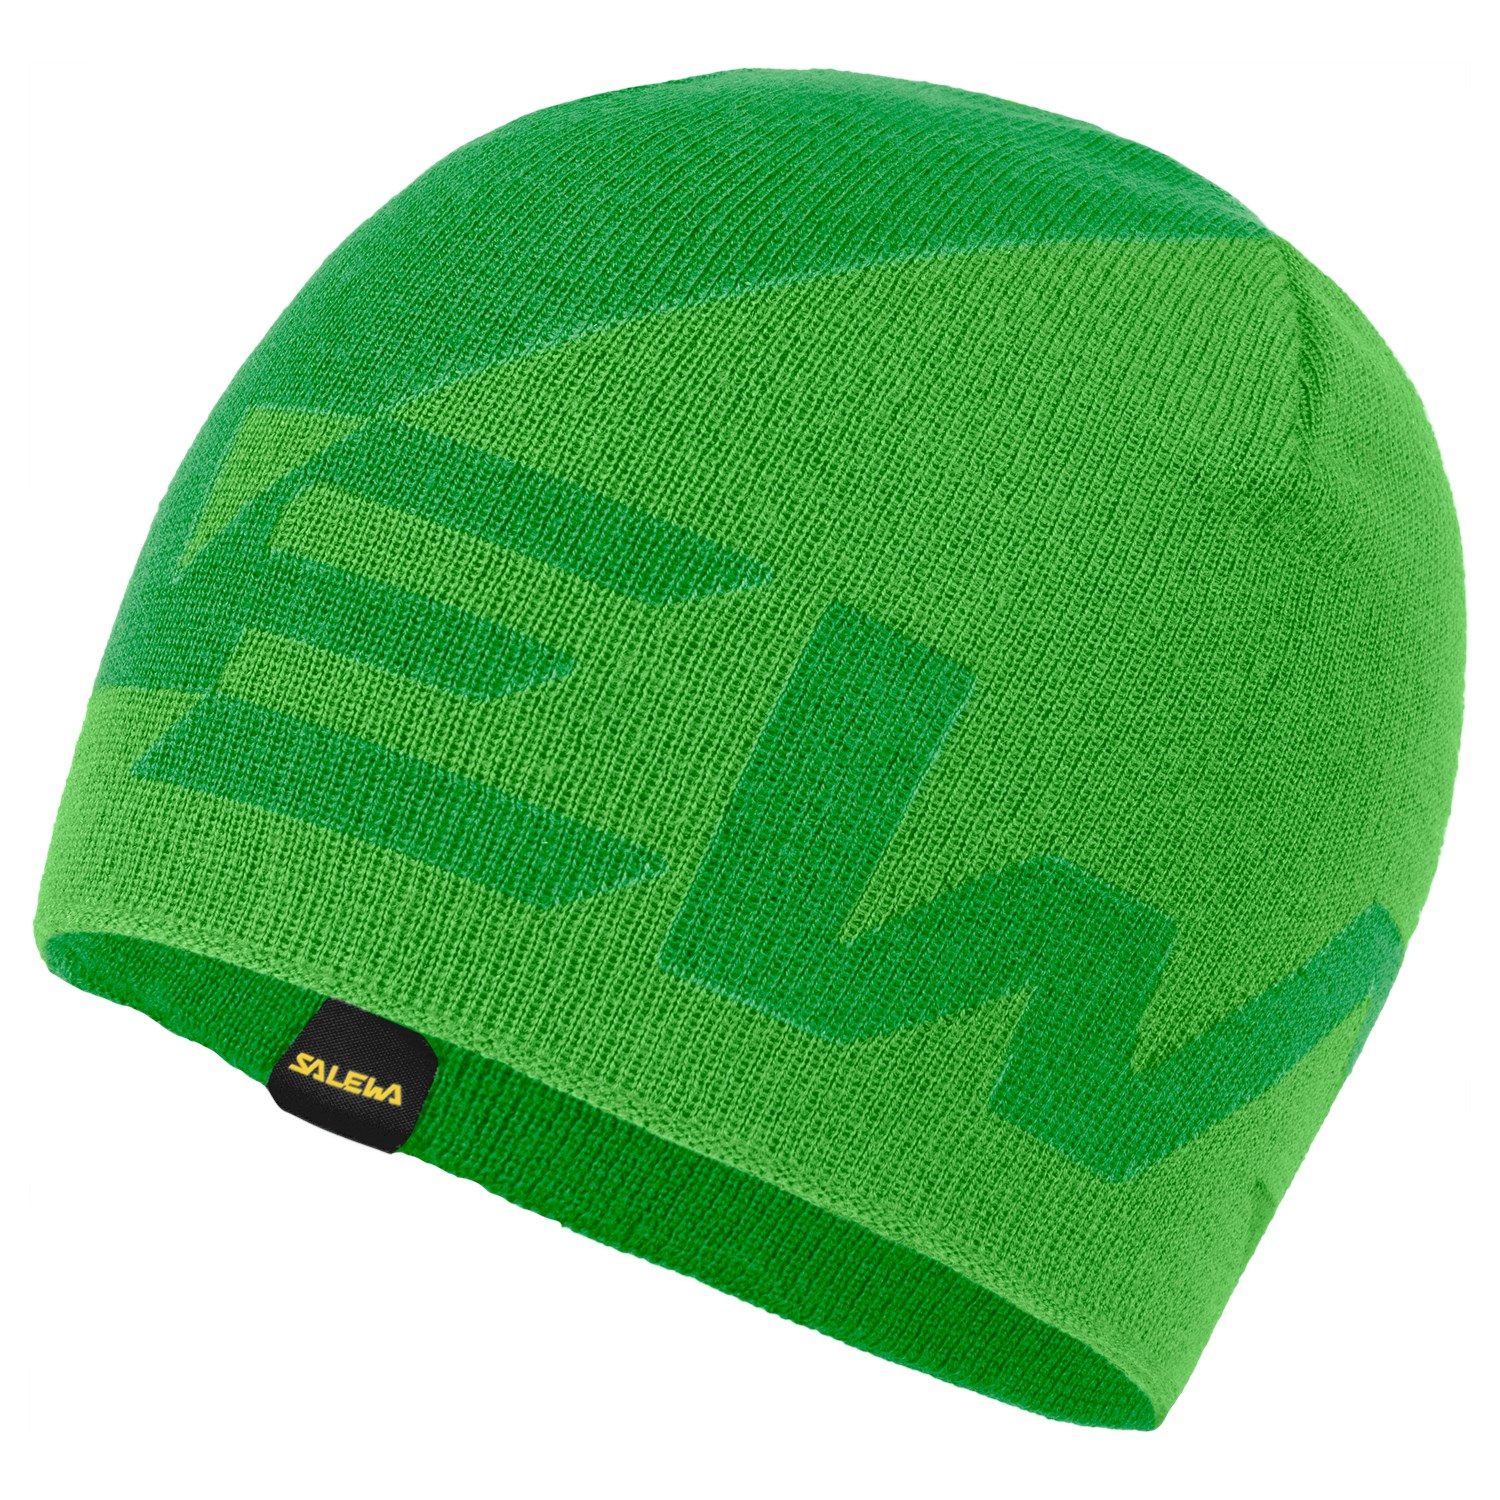 Шапка Salewa 2019-20 Antelao 2 Reversible Wool Green/Bright Green